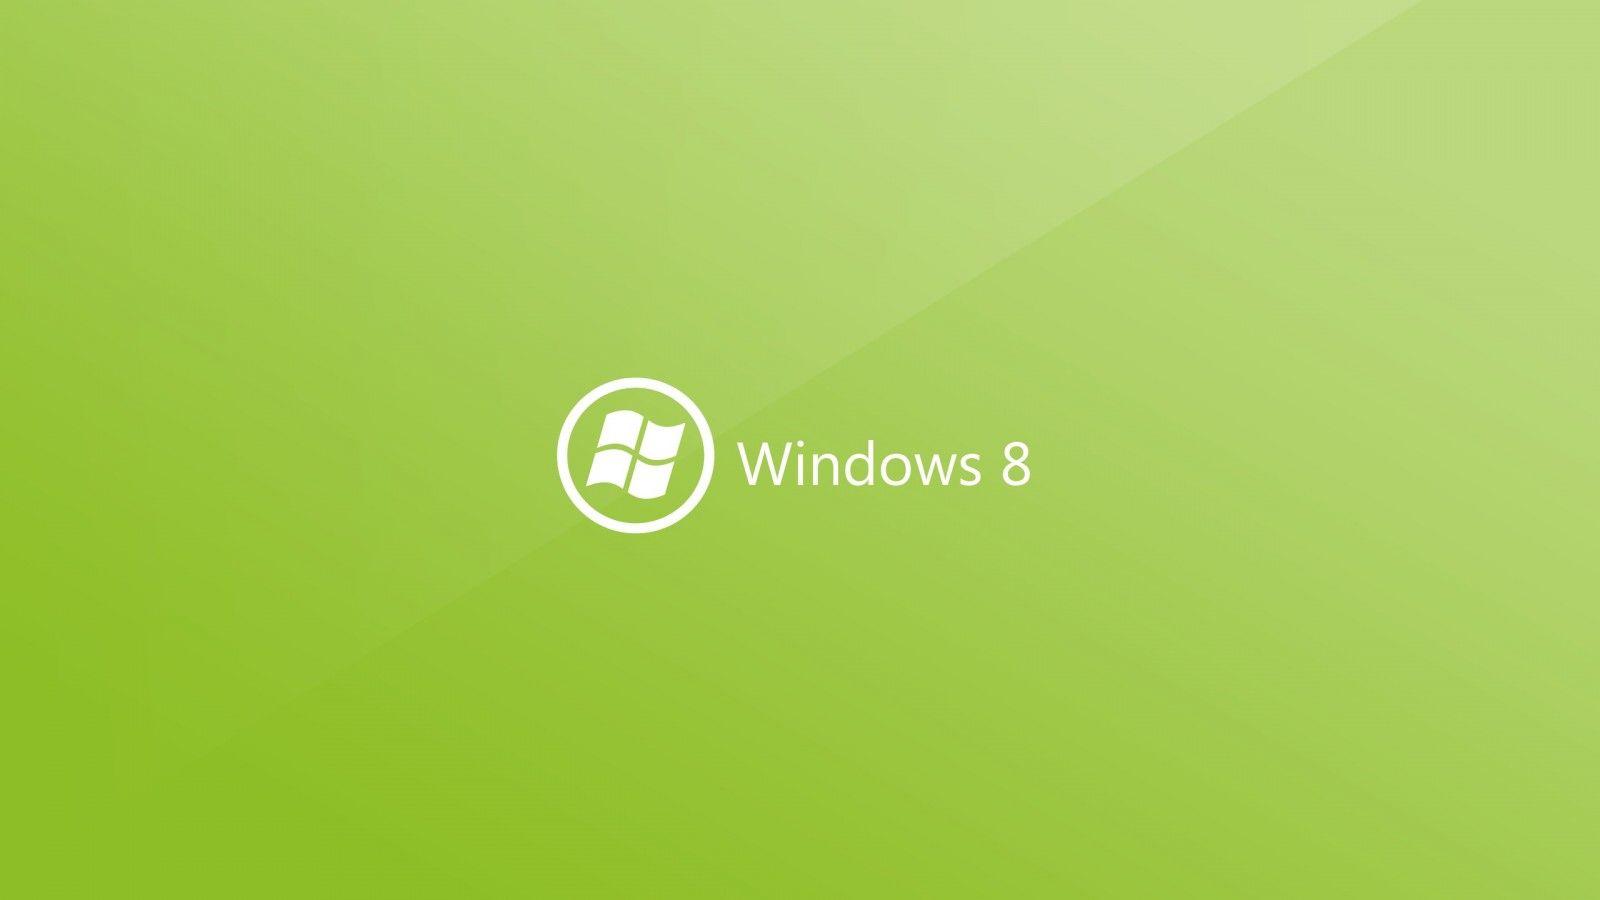 With Green Circle Brand Logo - Wallpaper : text, logo, green, circle, Microsoft Windows, brand